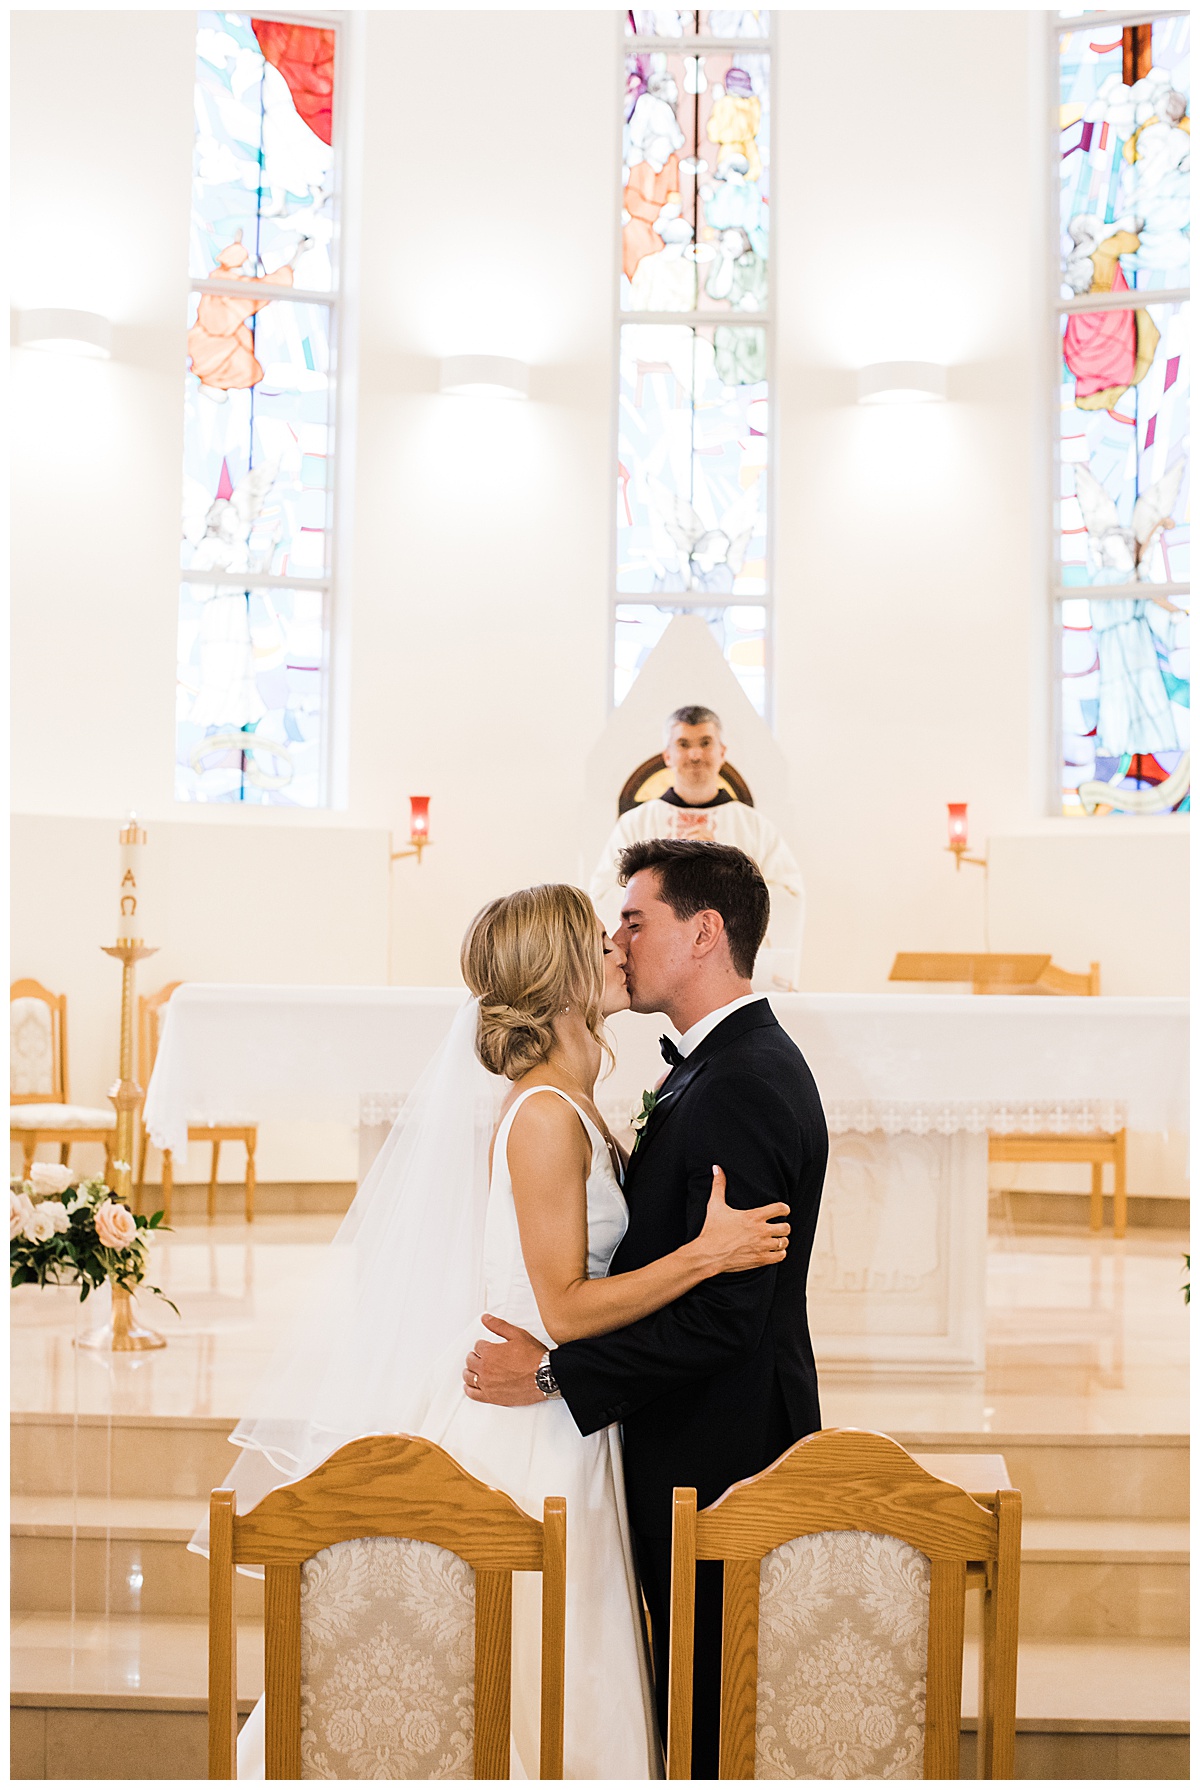 You may kiss the bride| Bride and groom first kiss| Ontario wedding| Toronto wedding photographer| 3photography